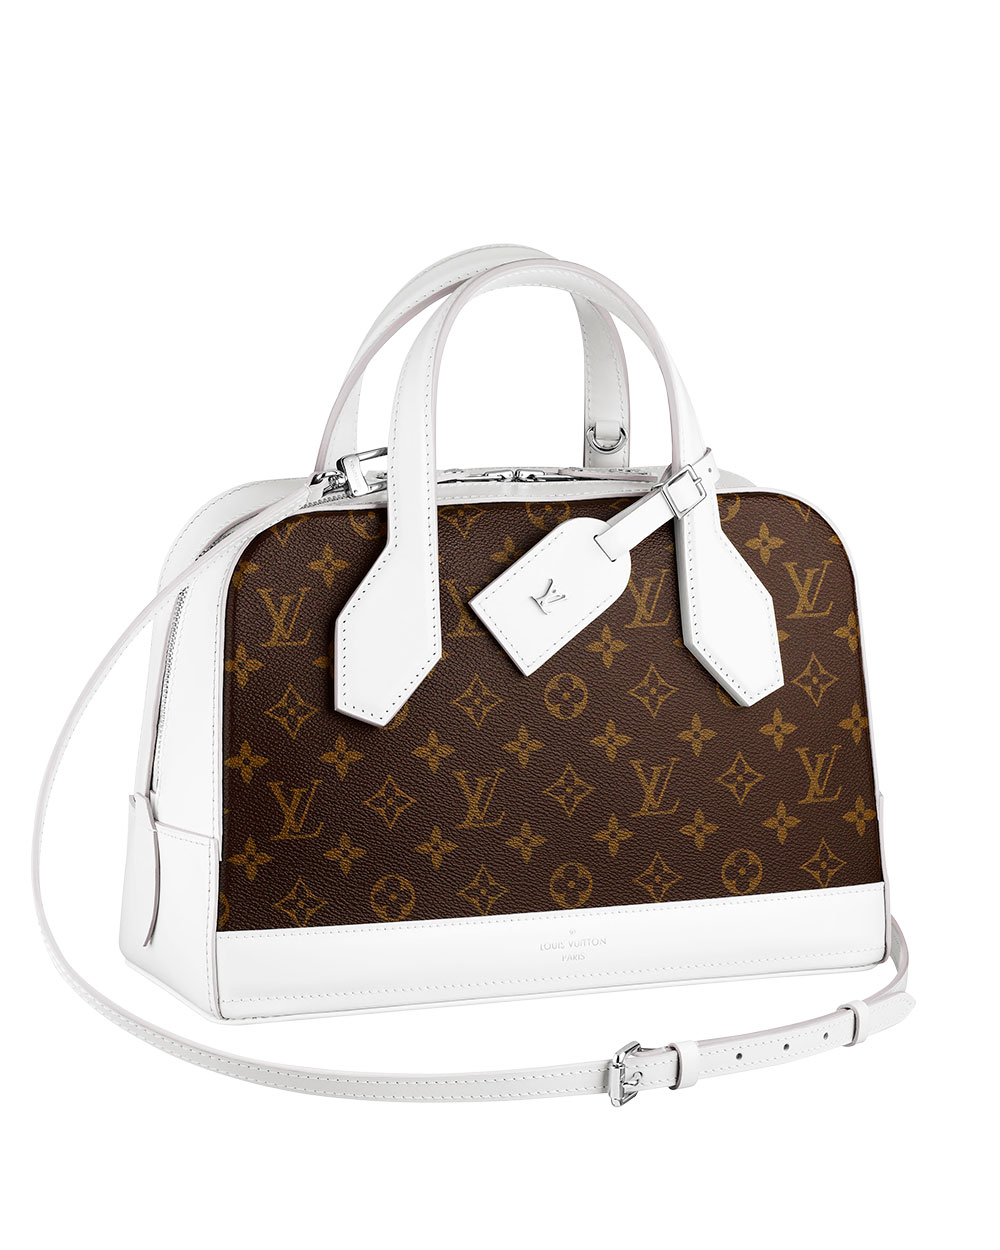 Louis Vuitton bag, $5,000. www.louisvuitton.com